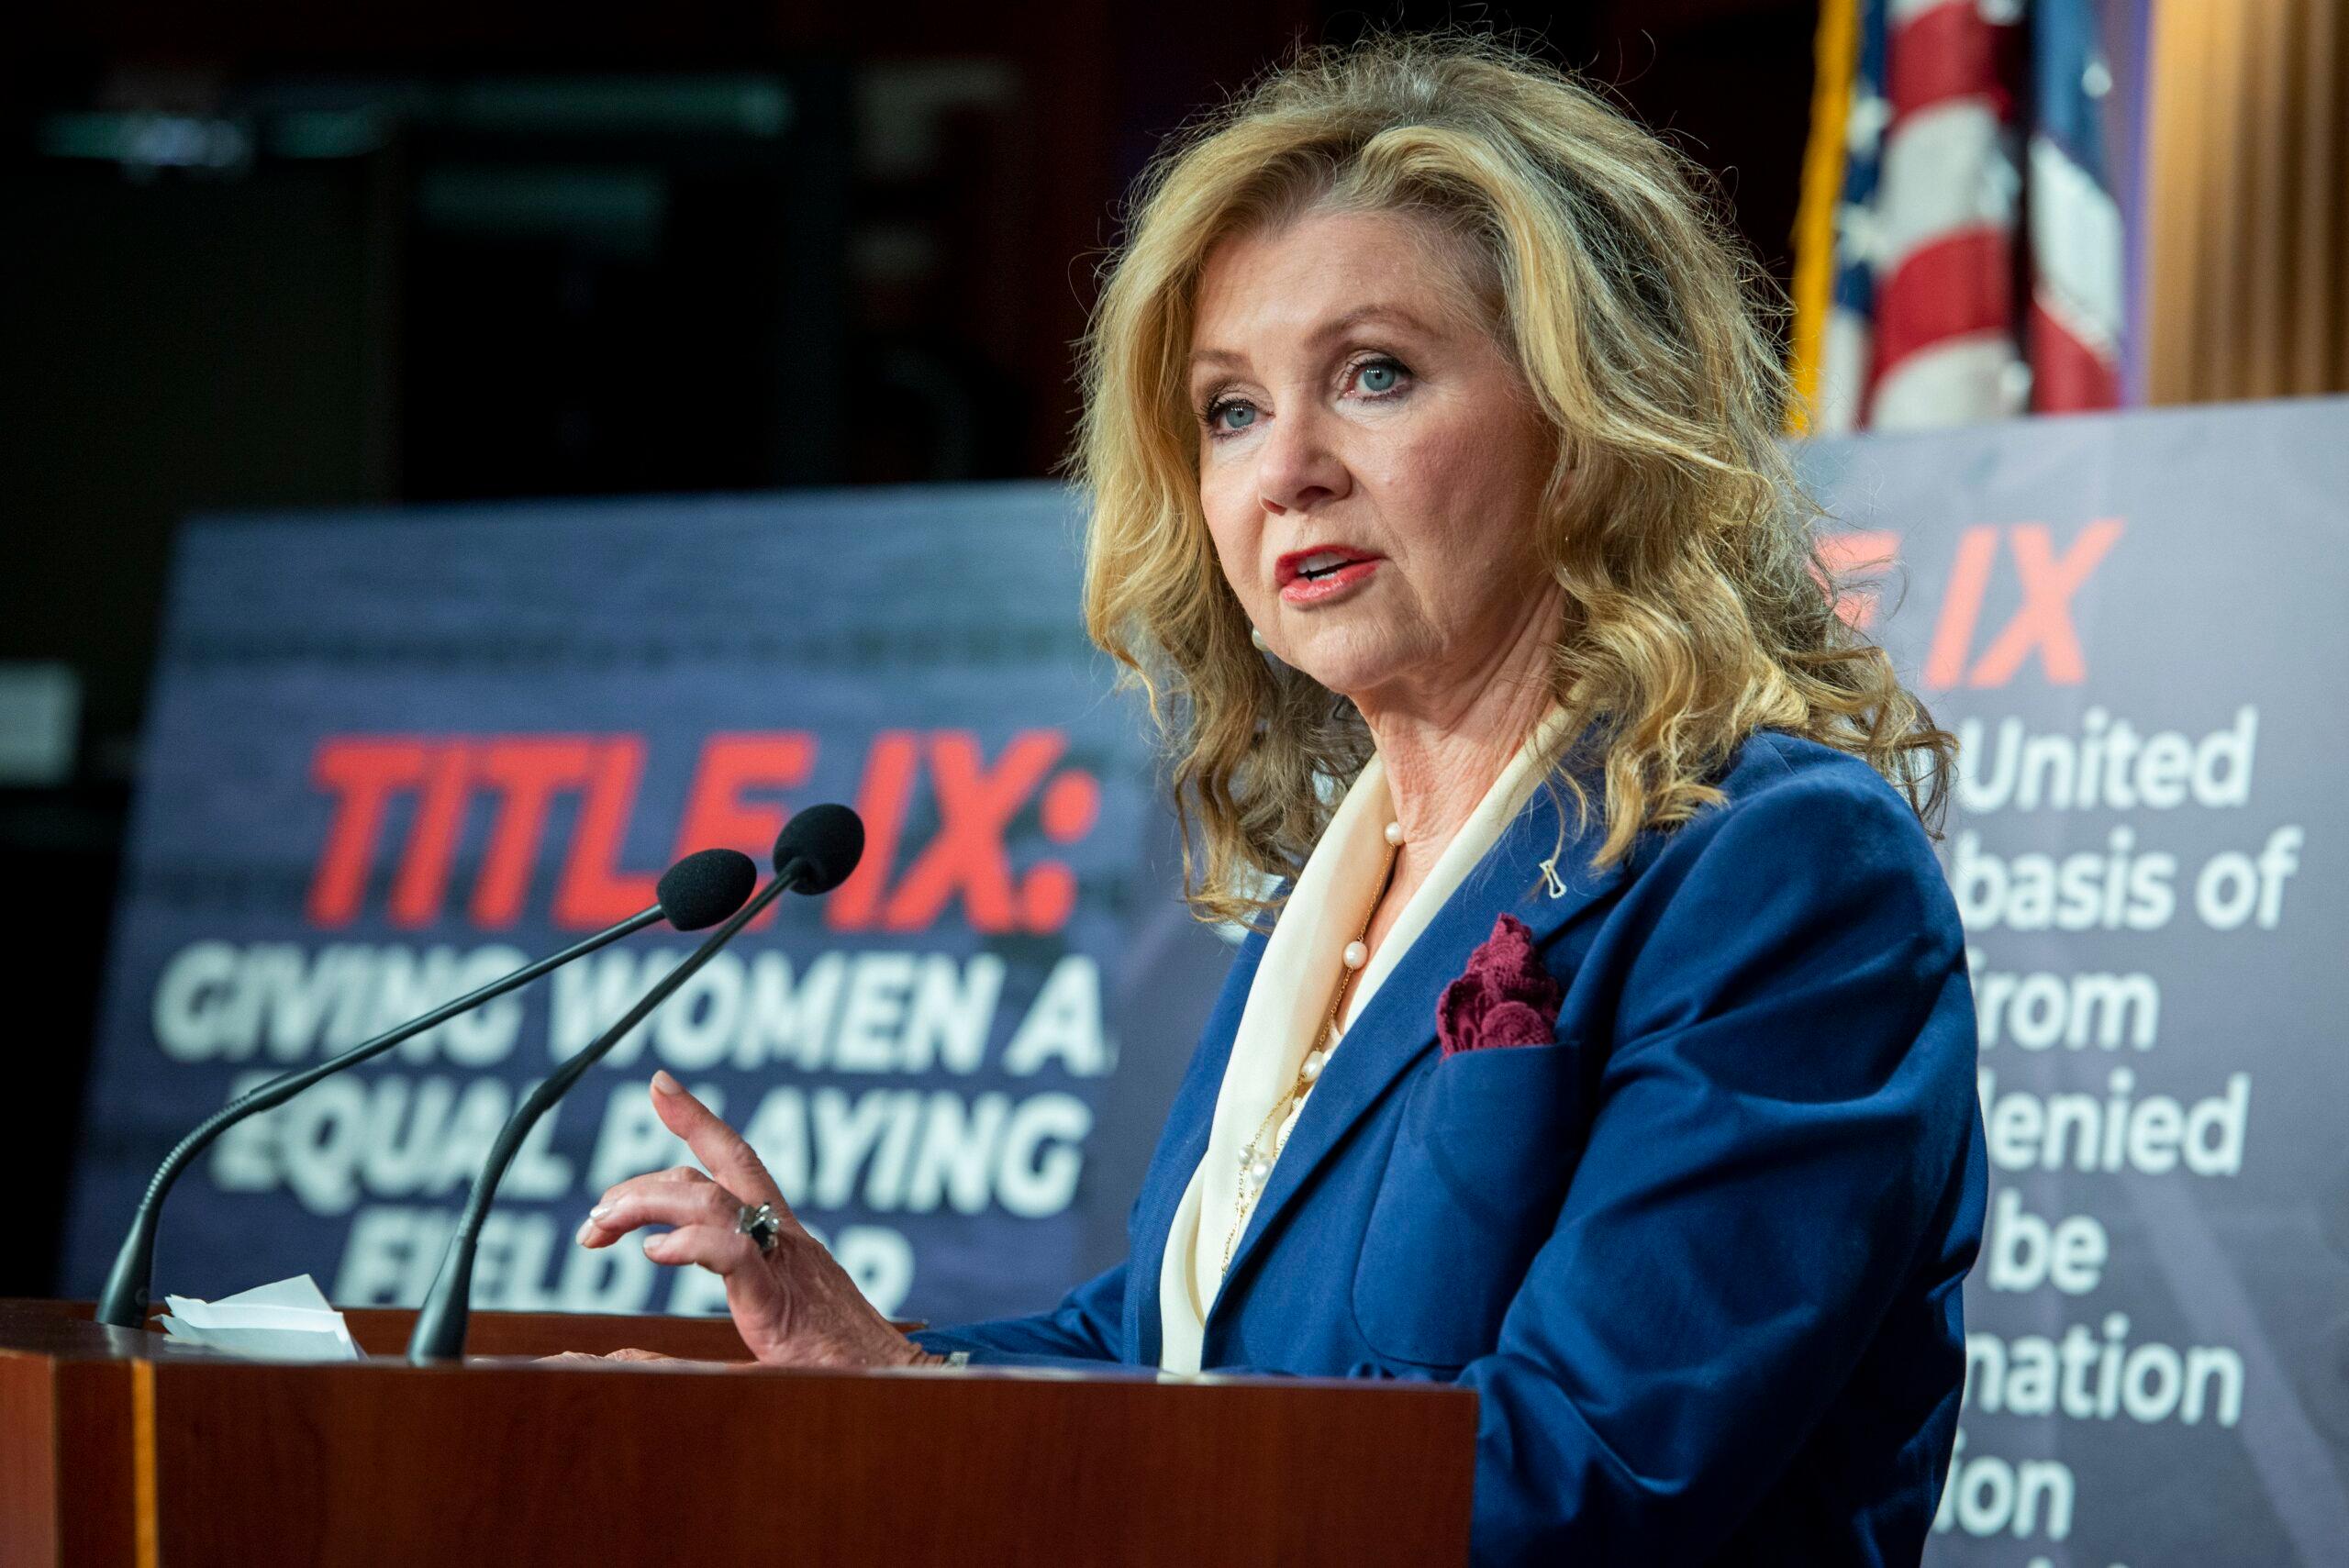 GOP Senators press conference on the 50th Anniversary of Title IX